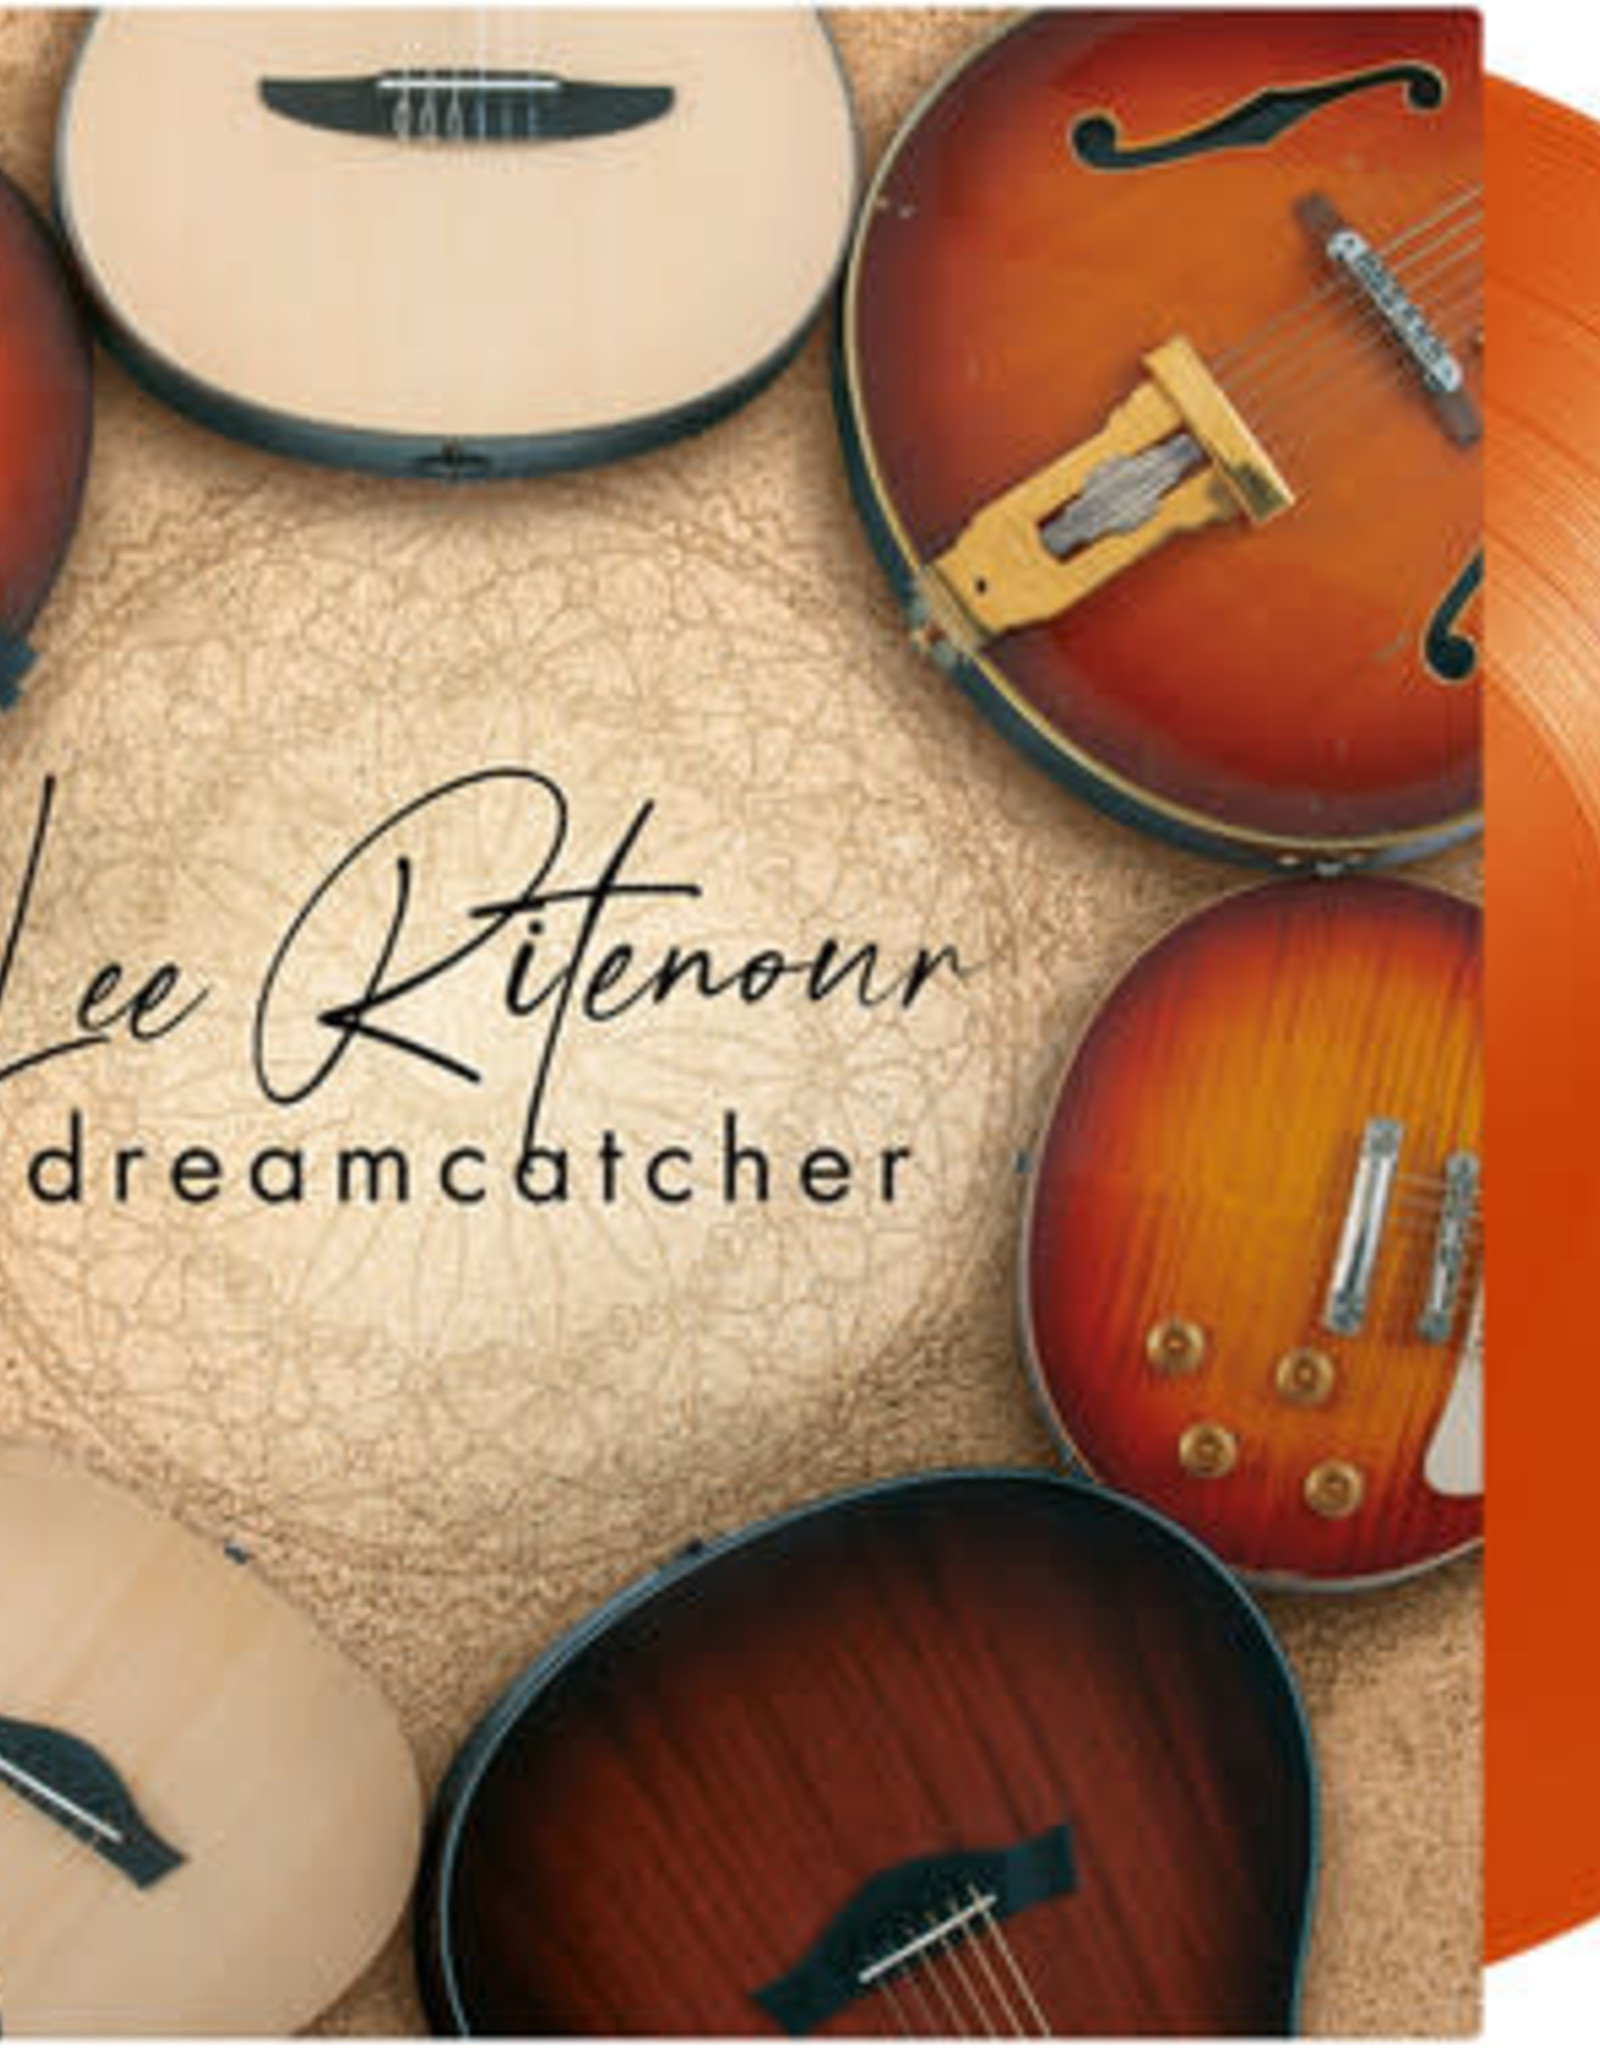 Lee Ritenour - Dreamcatcher (Orange Vinyl)